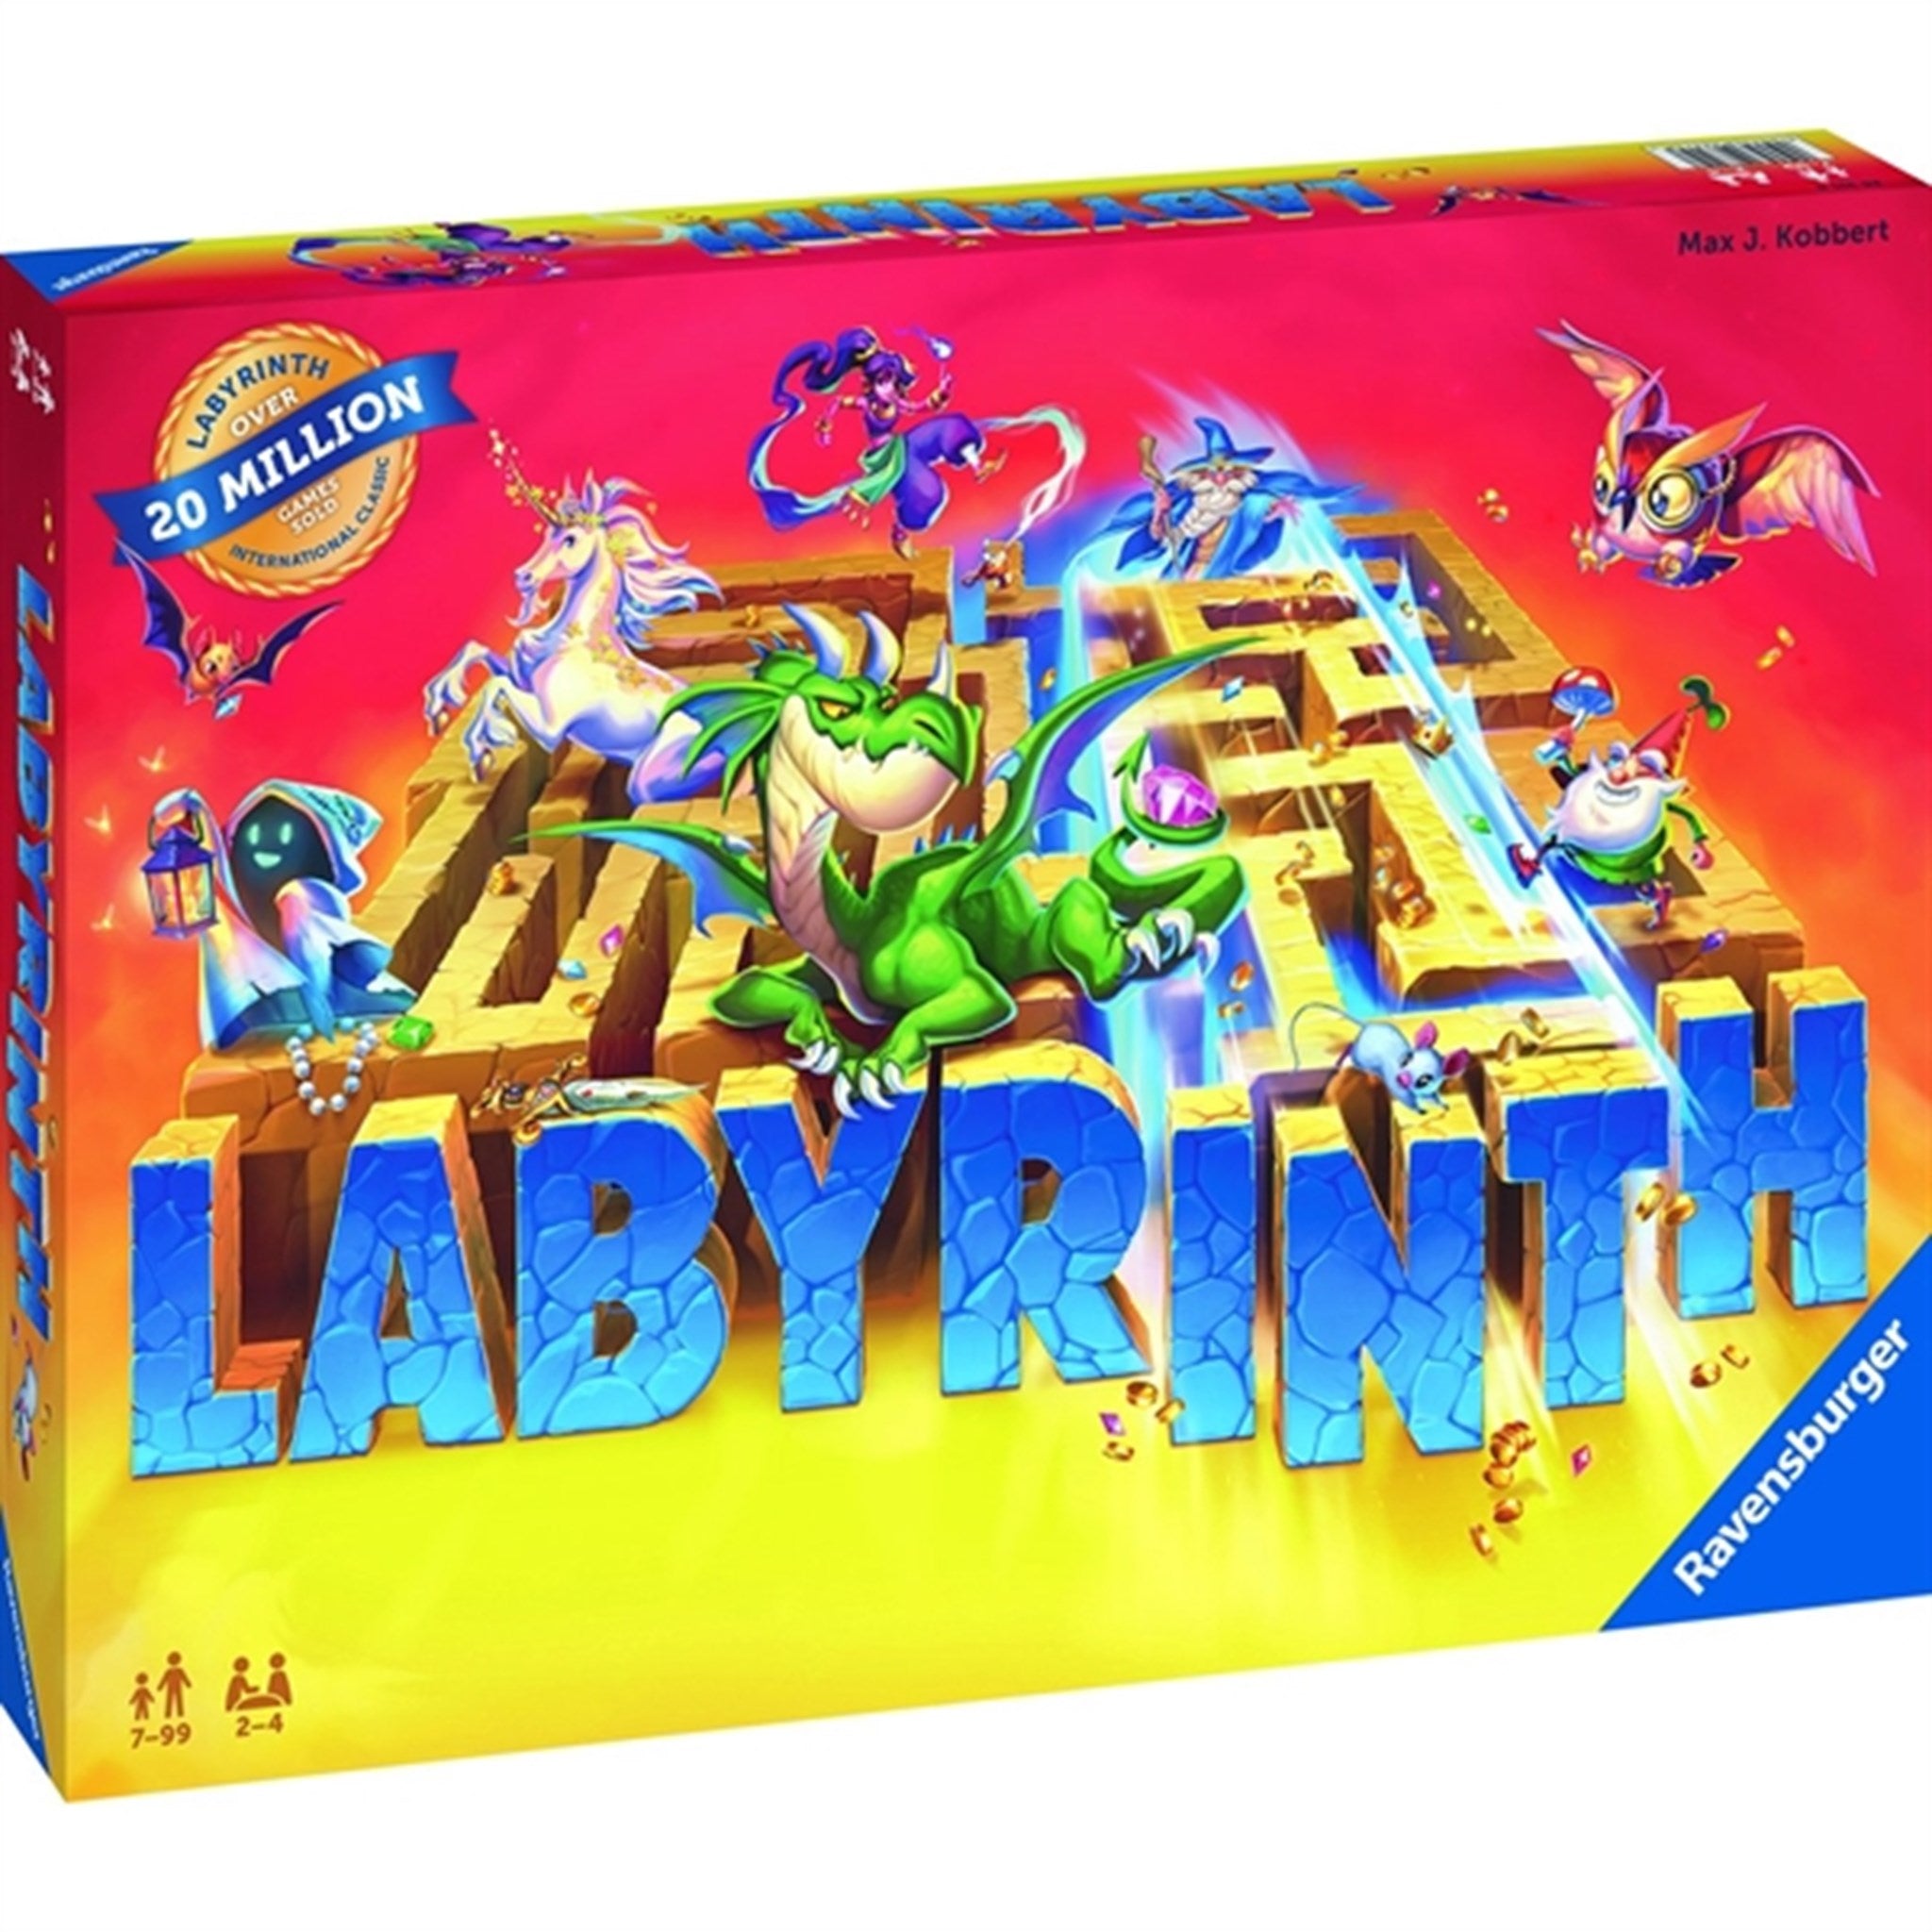 Ravensburger Labyrinth Board Game 3